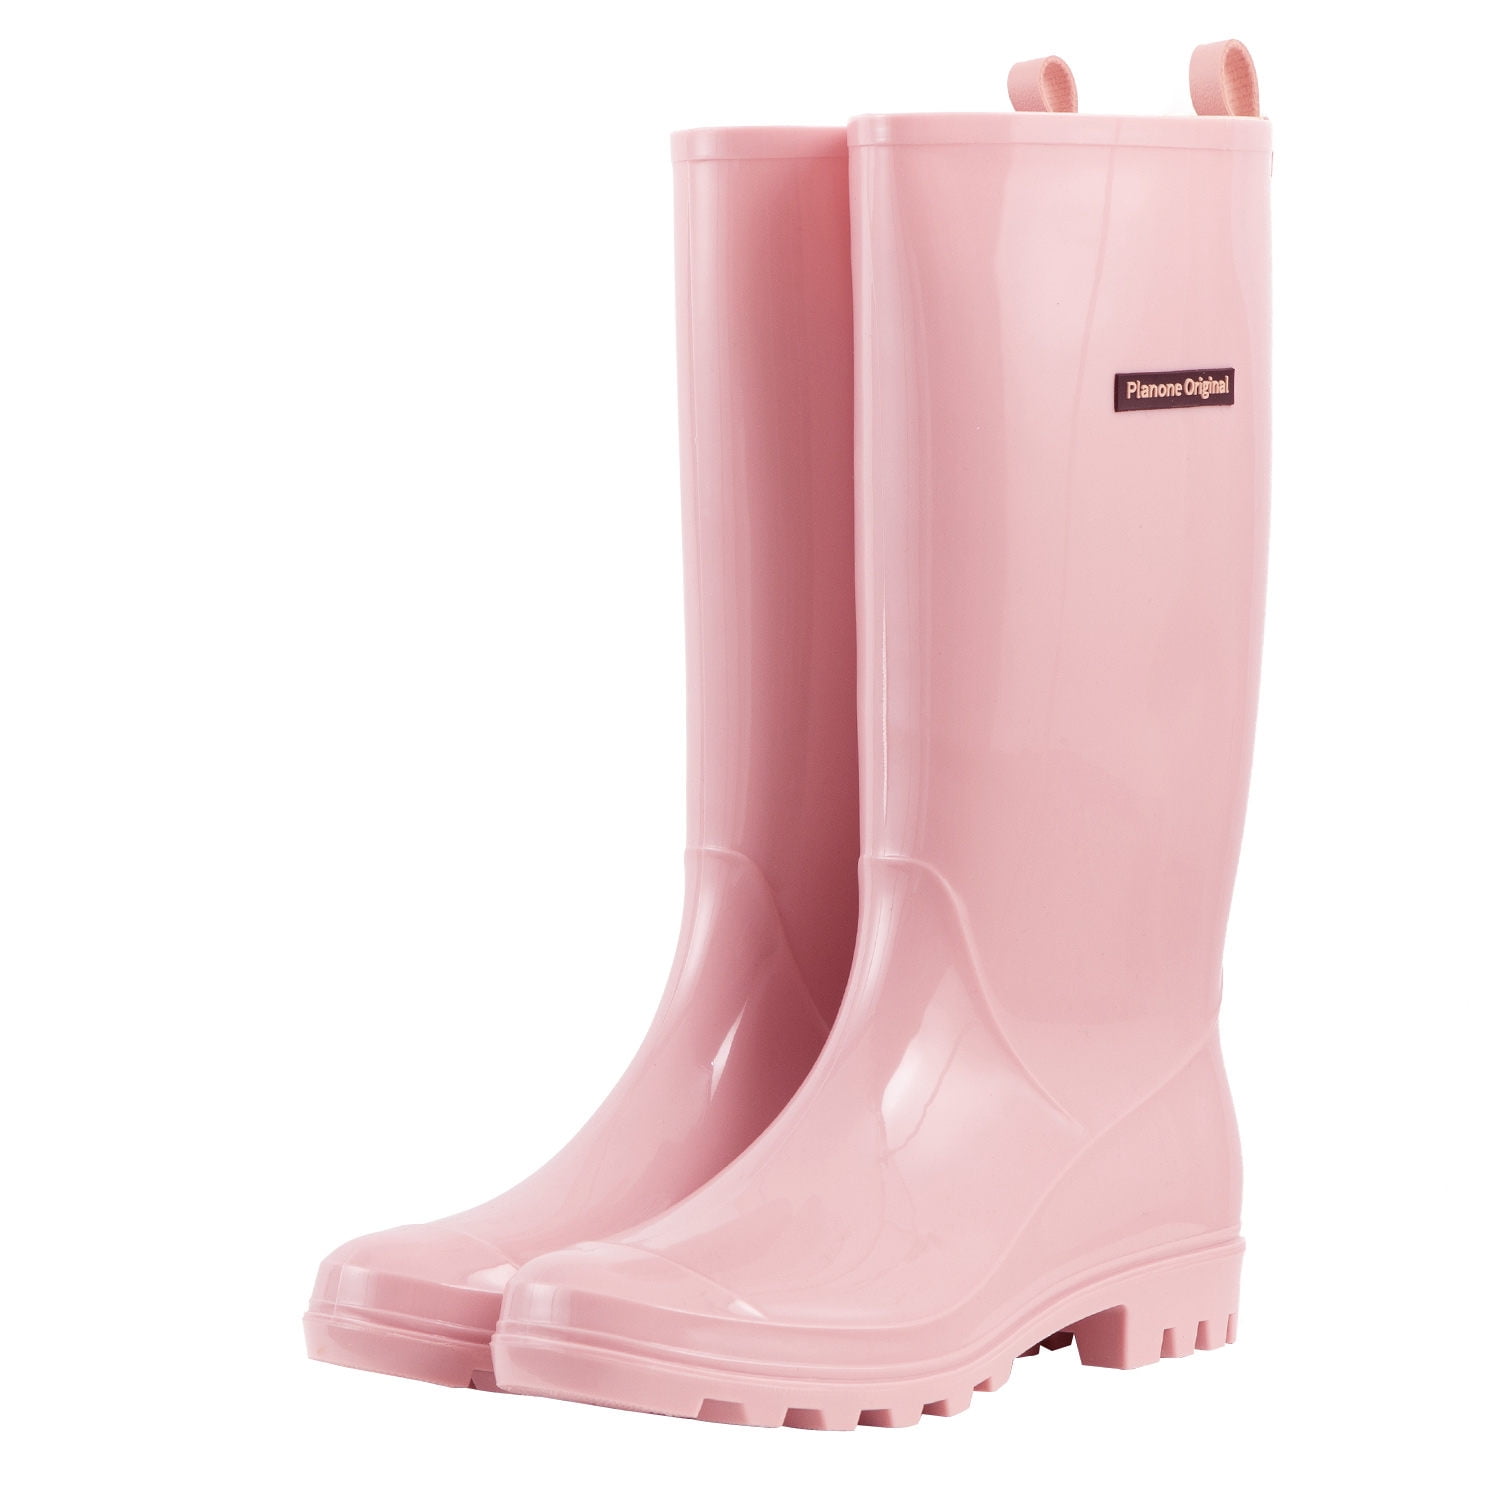 Planone Tall rain Boots for Women Waterproof Garden Shoes Anti-Slipping ...